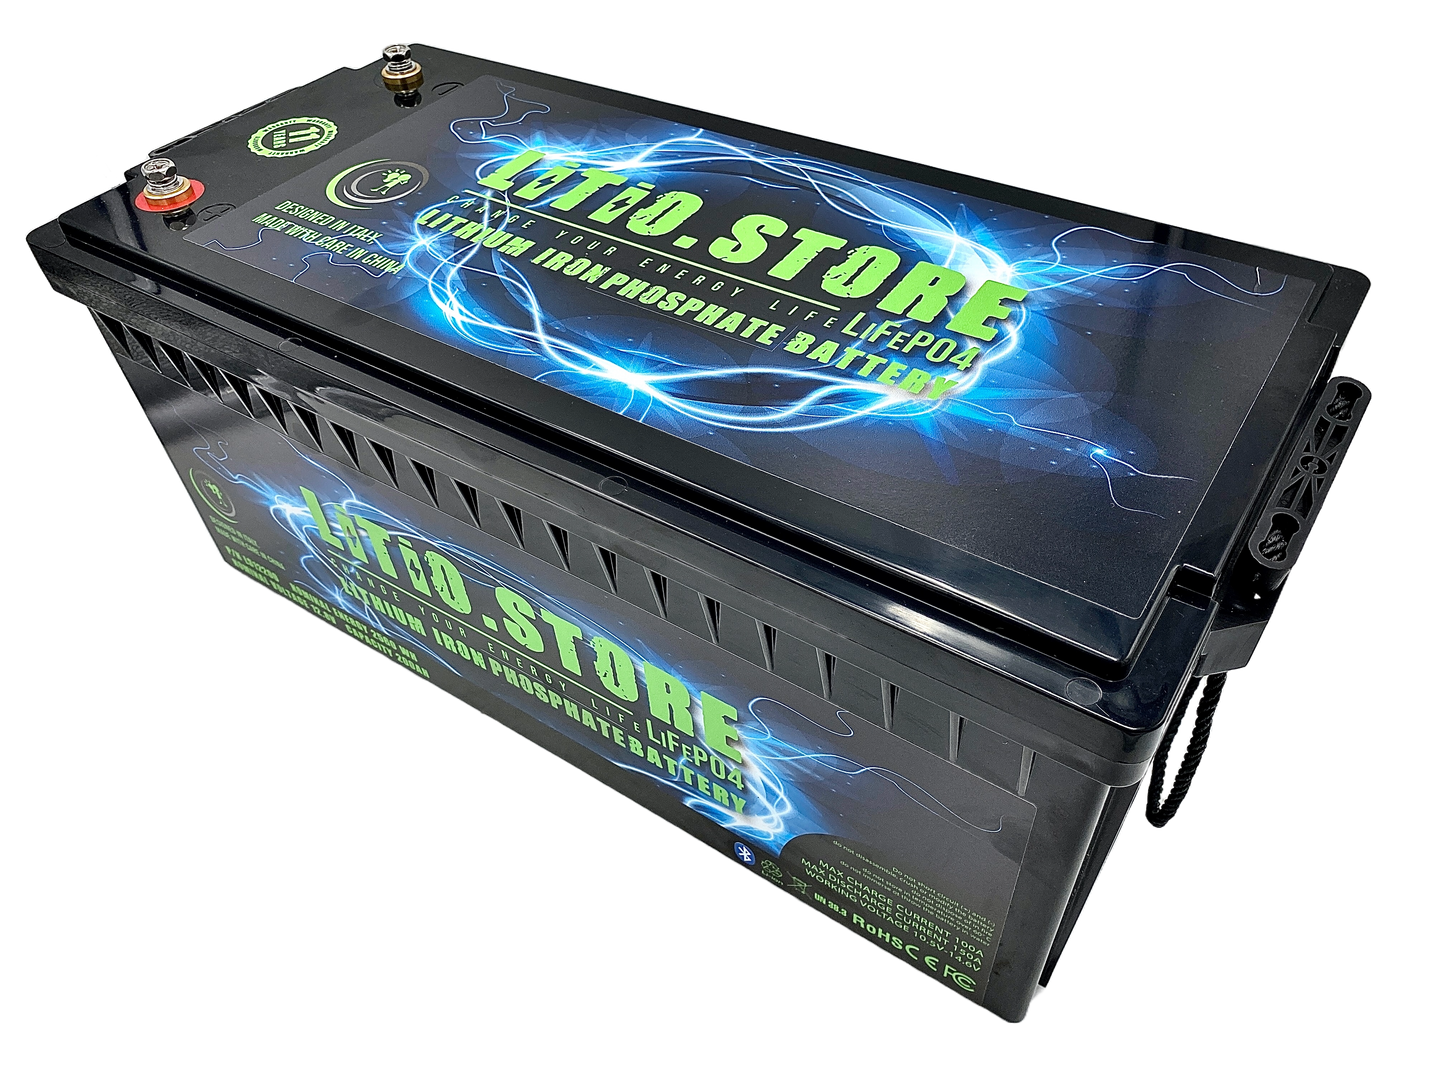 Batterie LiFePO4 24V 100Ah 2560Wh 100A BMS Lithium Serie bluetooth Litio Store